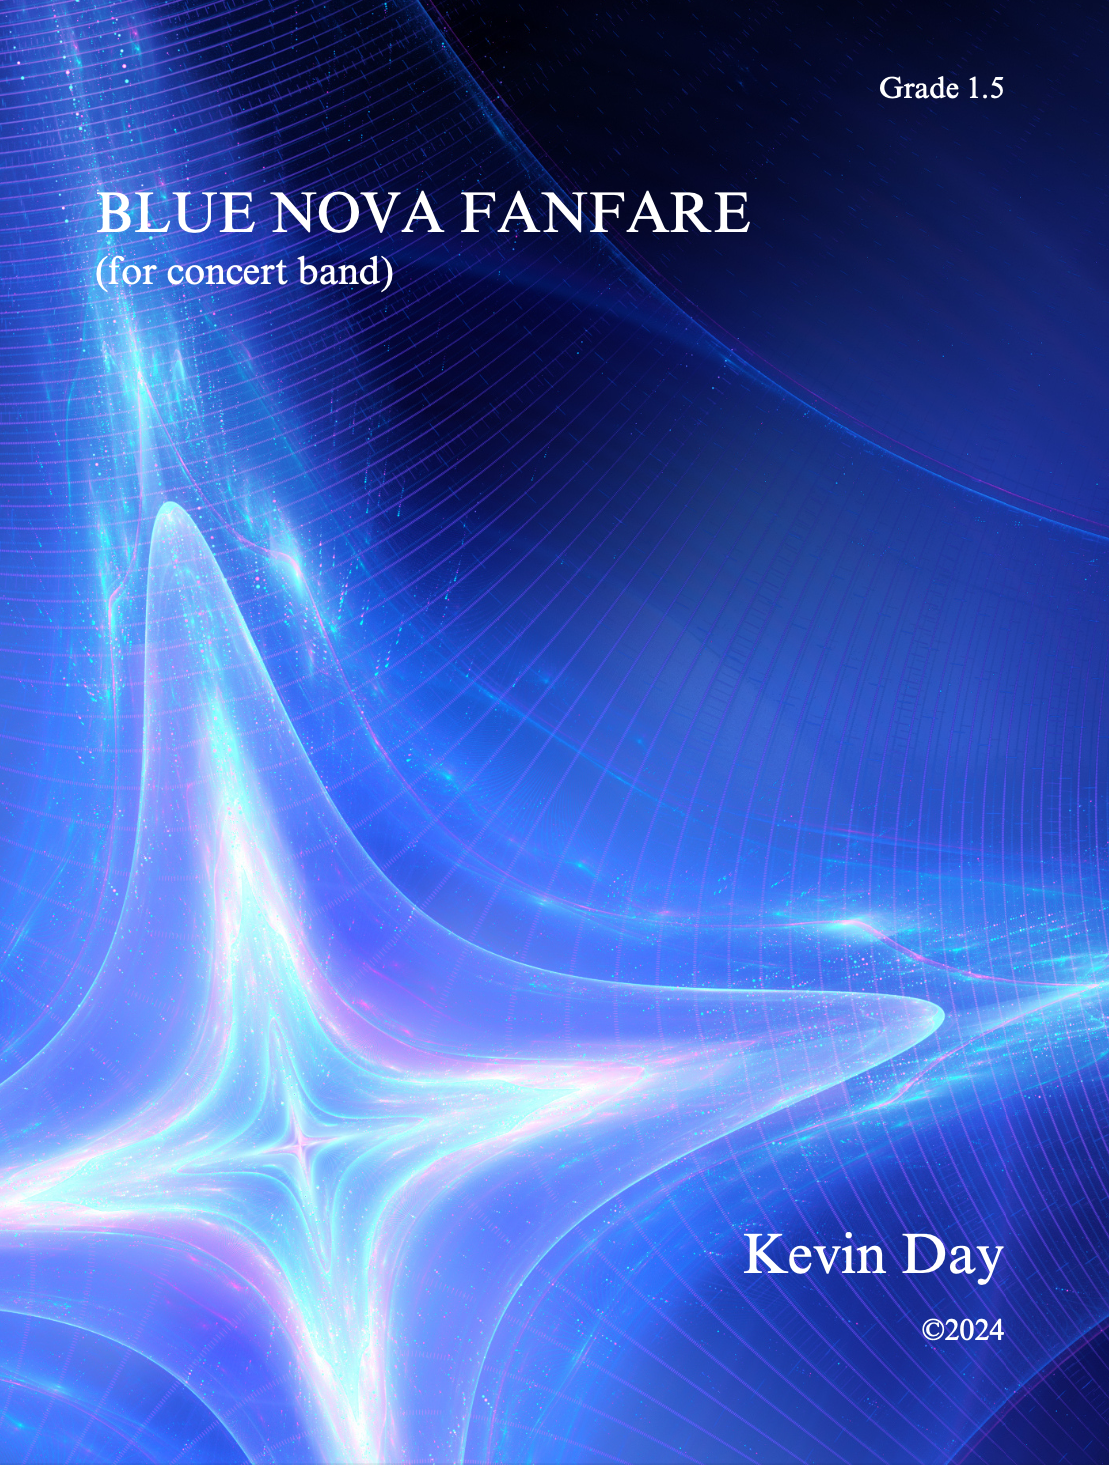 Blue Nova Fanfare (Score Only) by Kevin Day